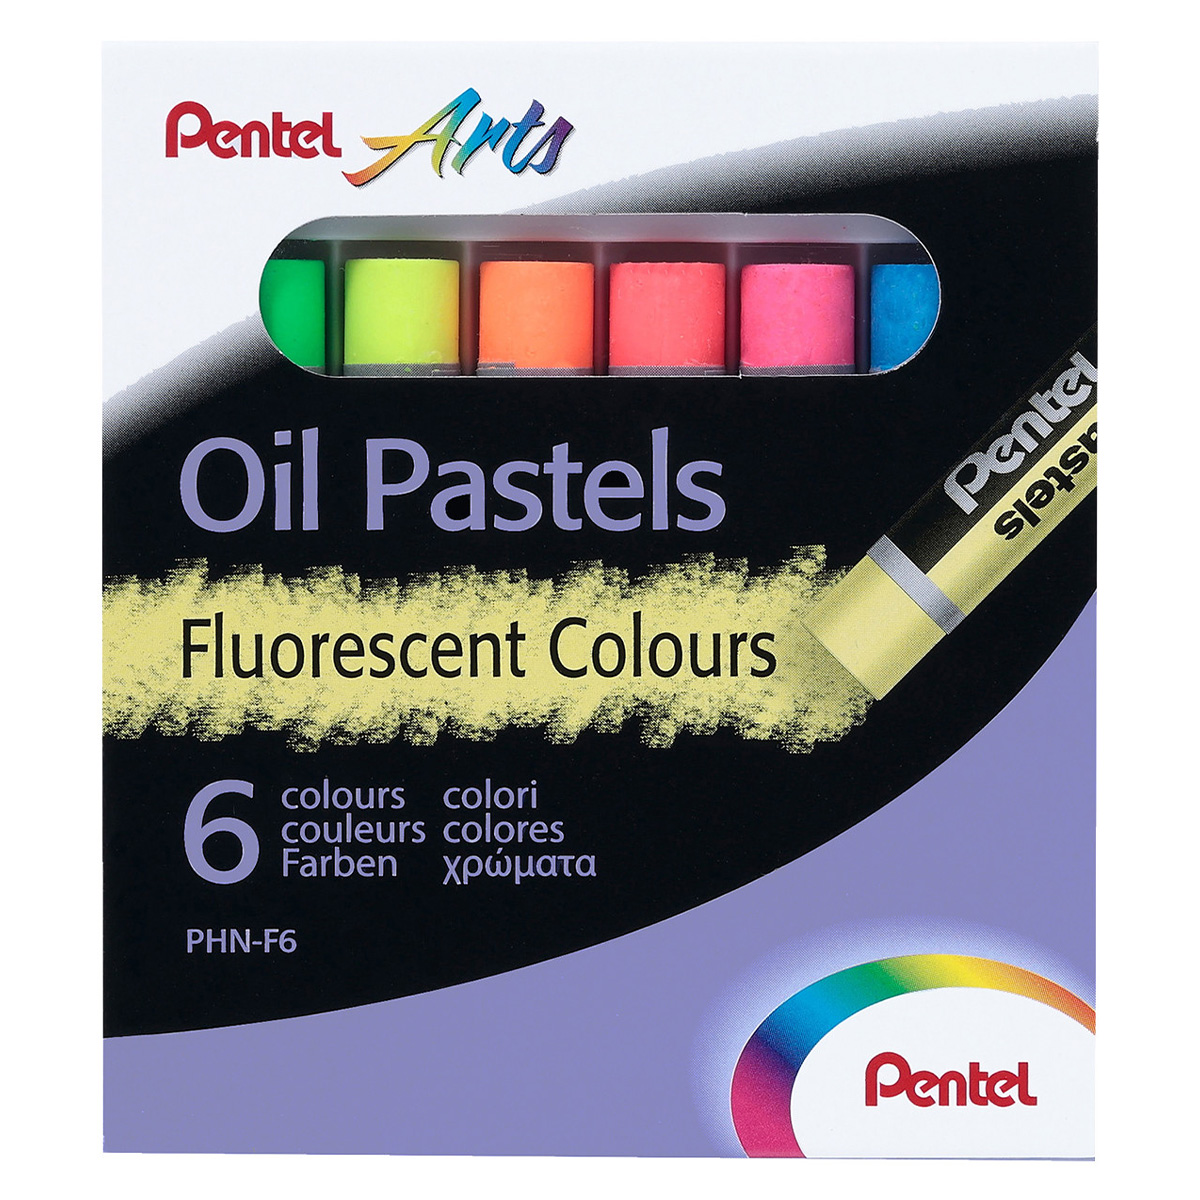 Pentel Oil Pastels Crayons